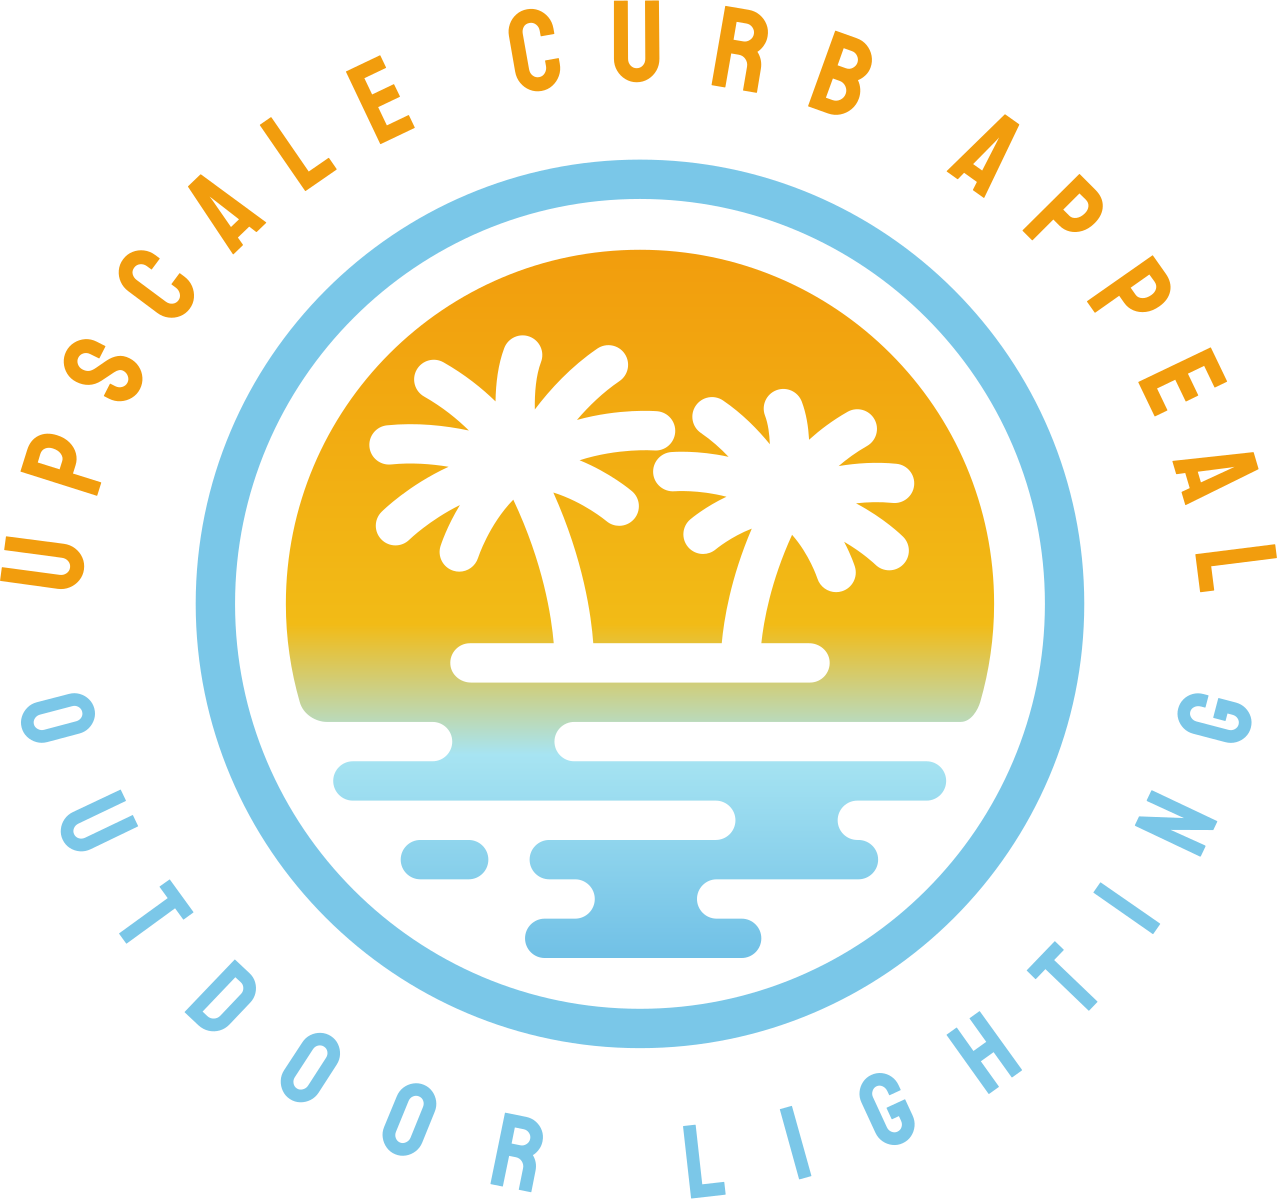 UPSCALE CURB APPEAL's logo